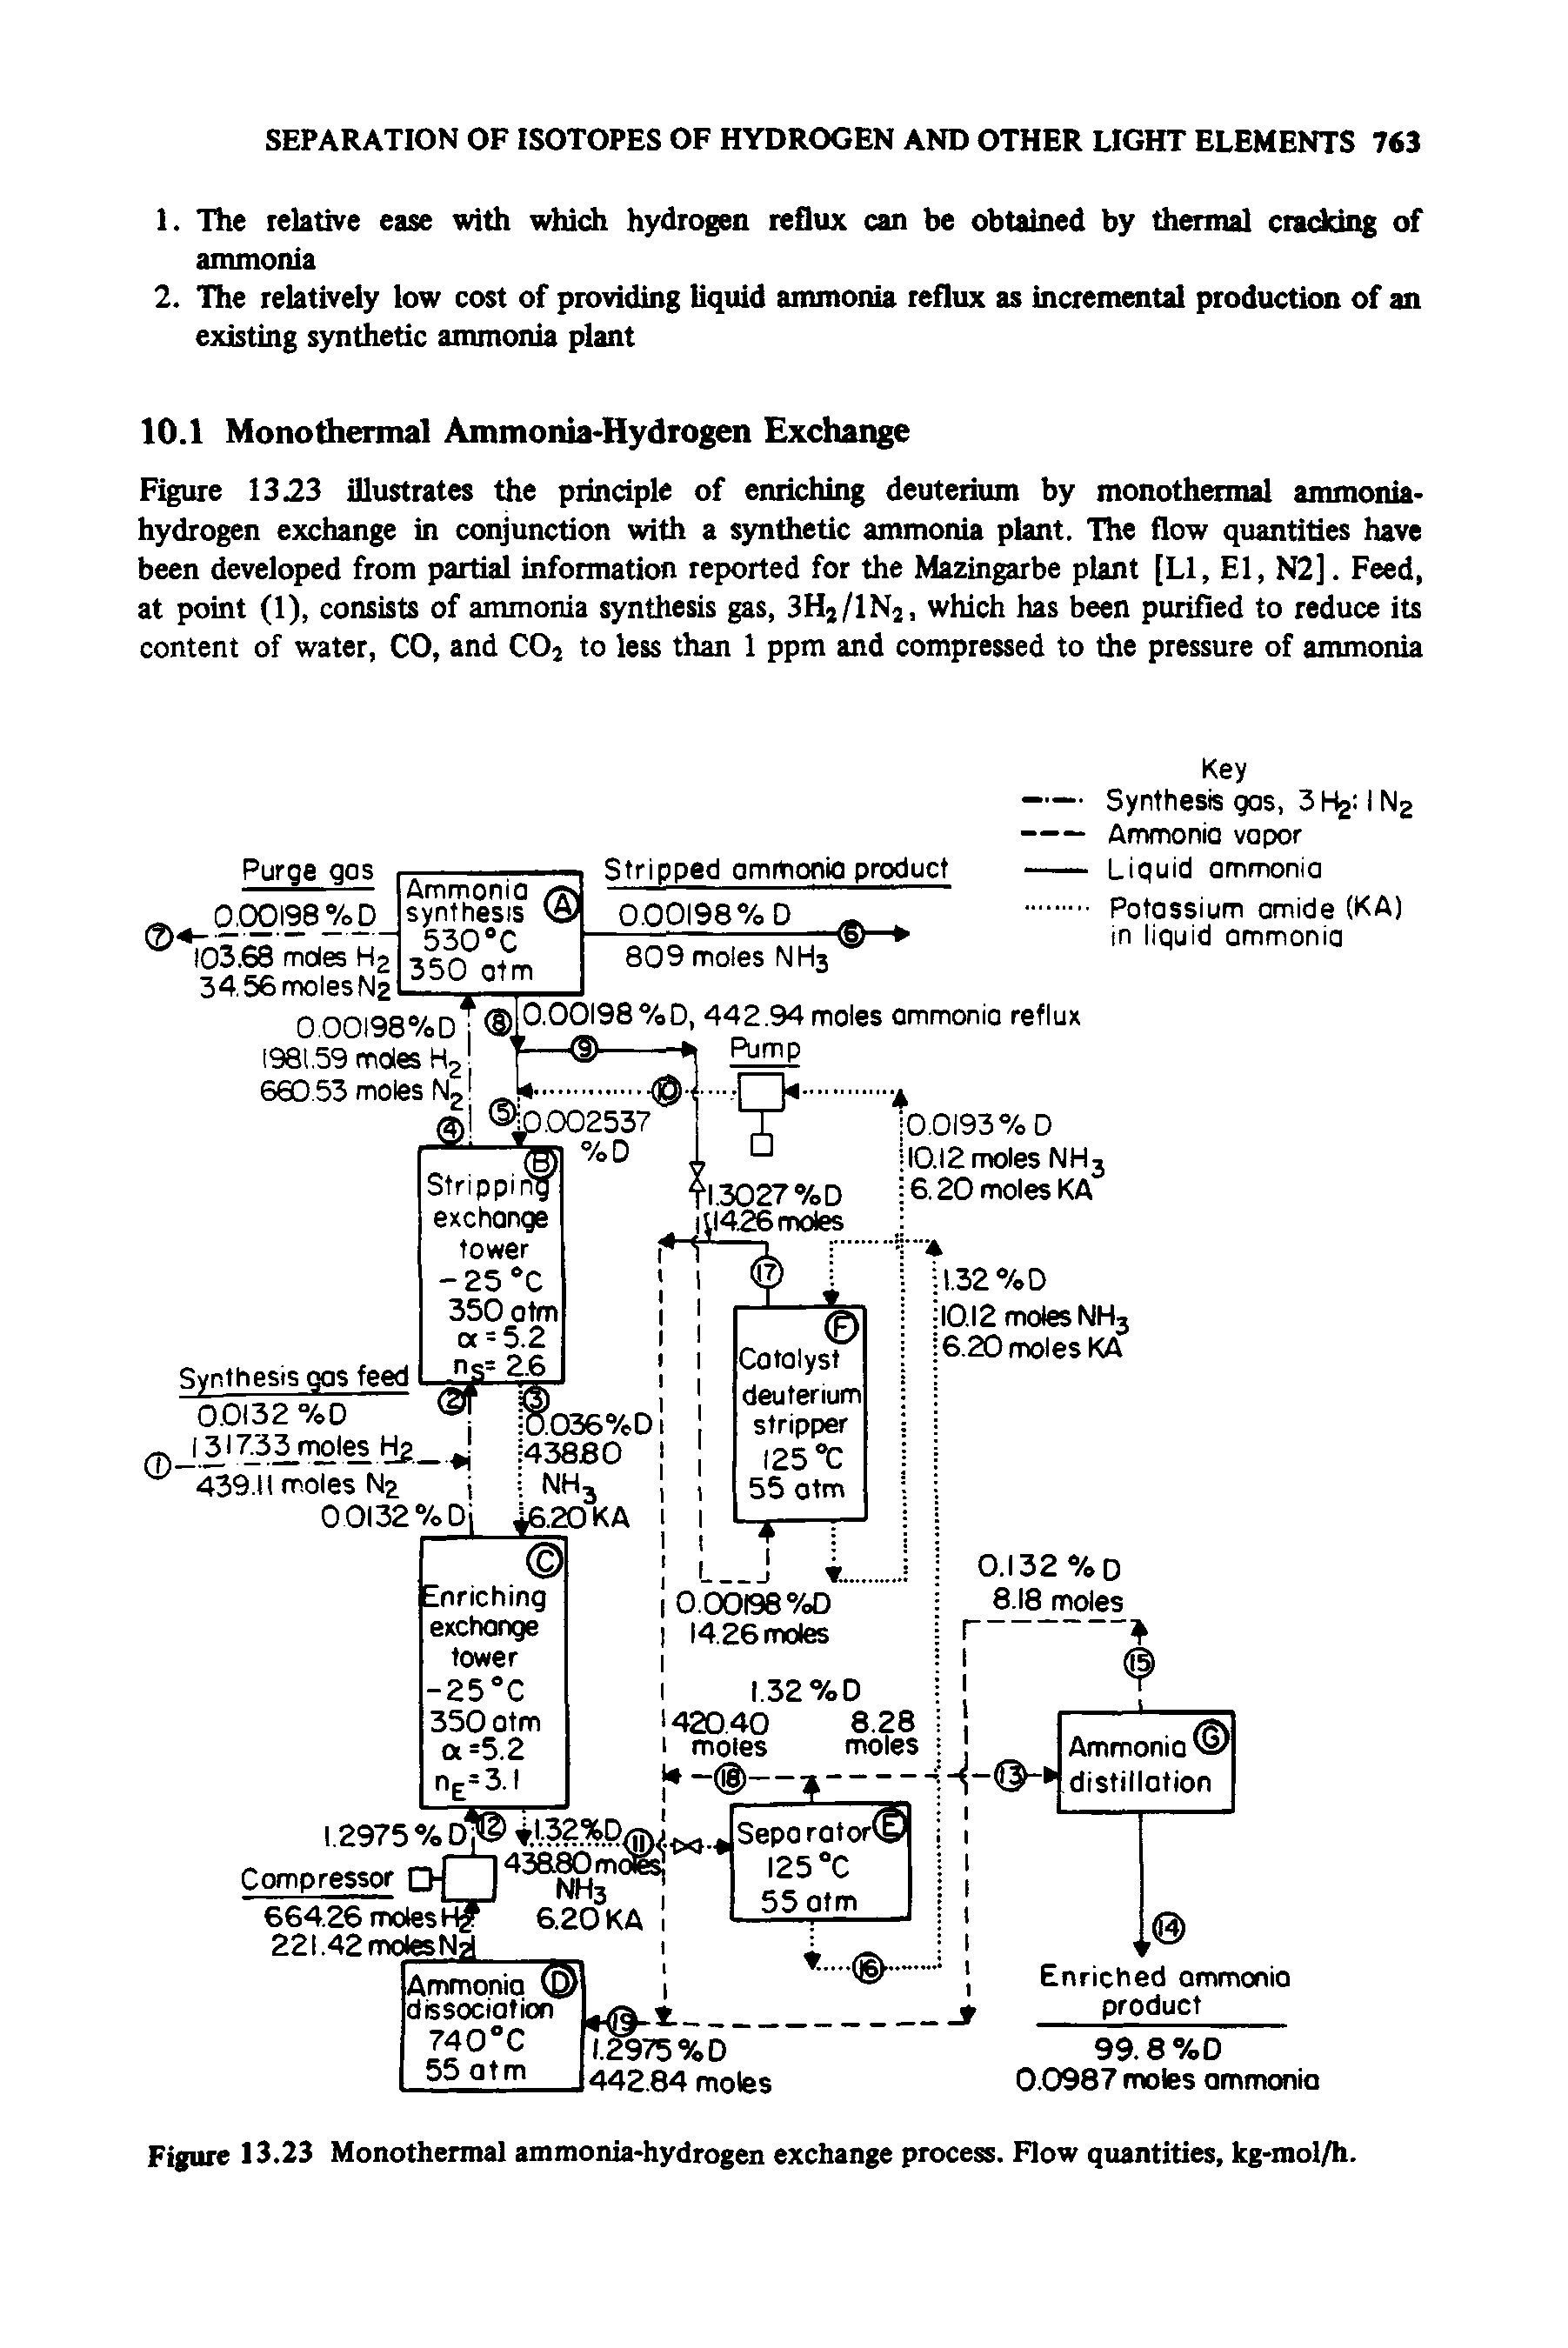 Figure 13.23 Monothermal ammonia-hydrogen exchange process. Flow quantities, kg-mol/h.